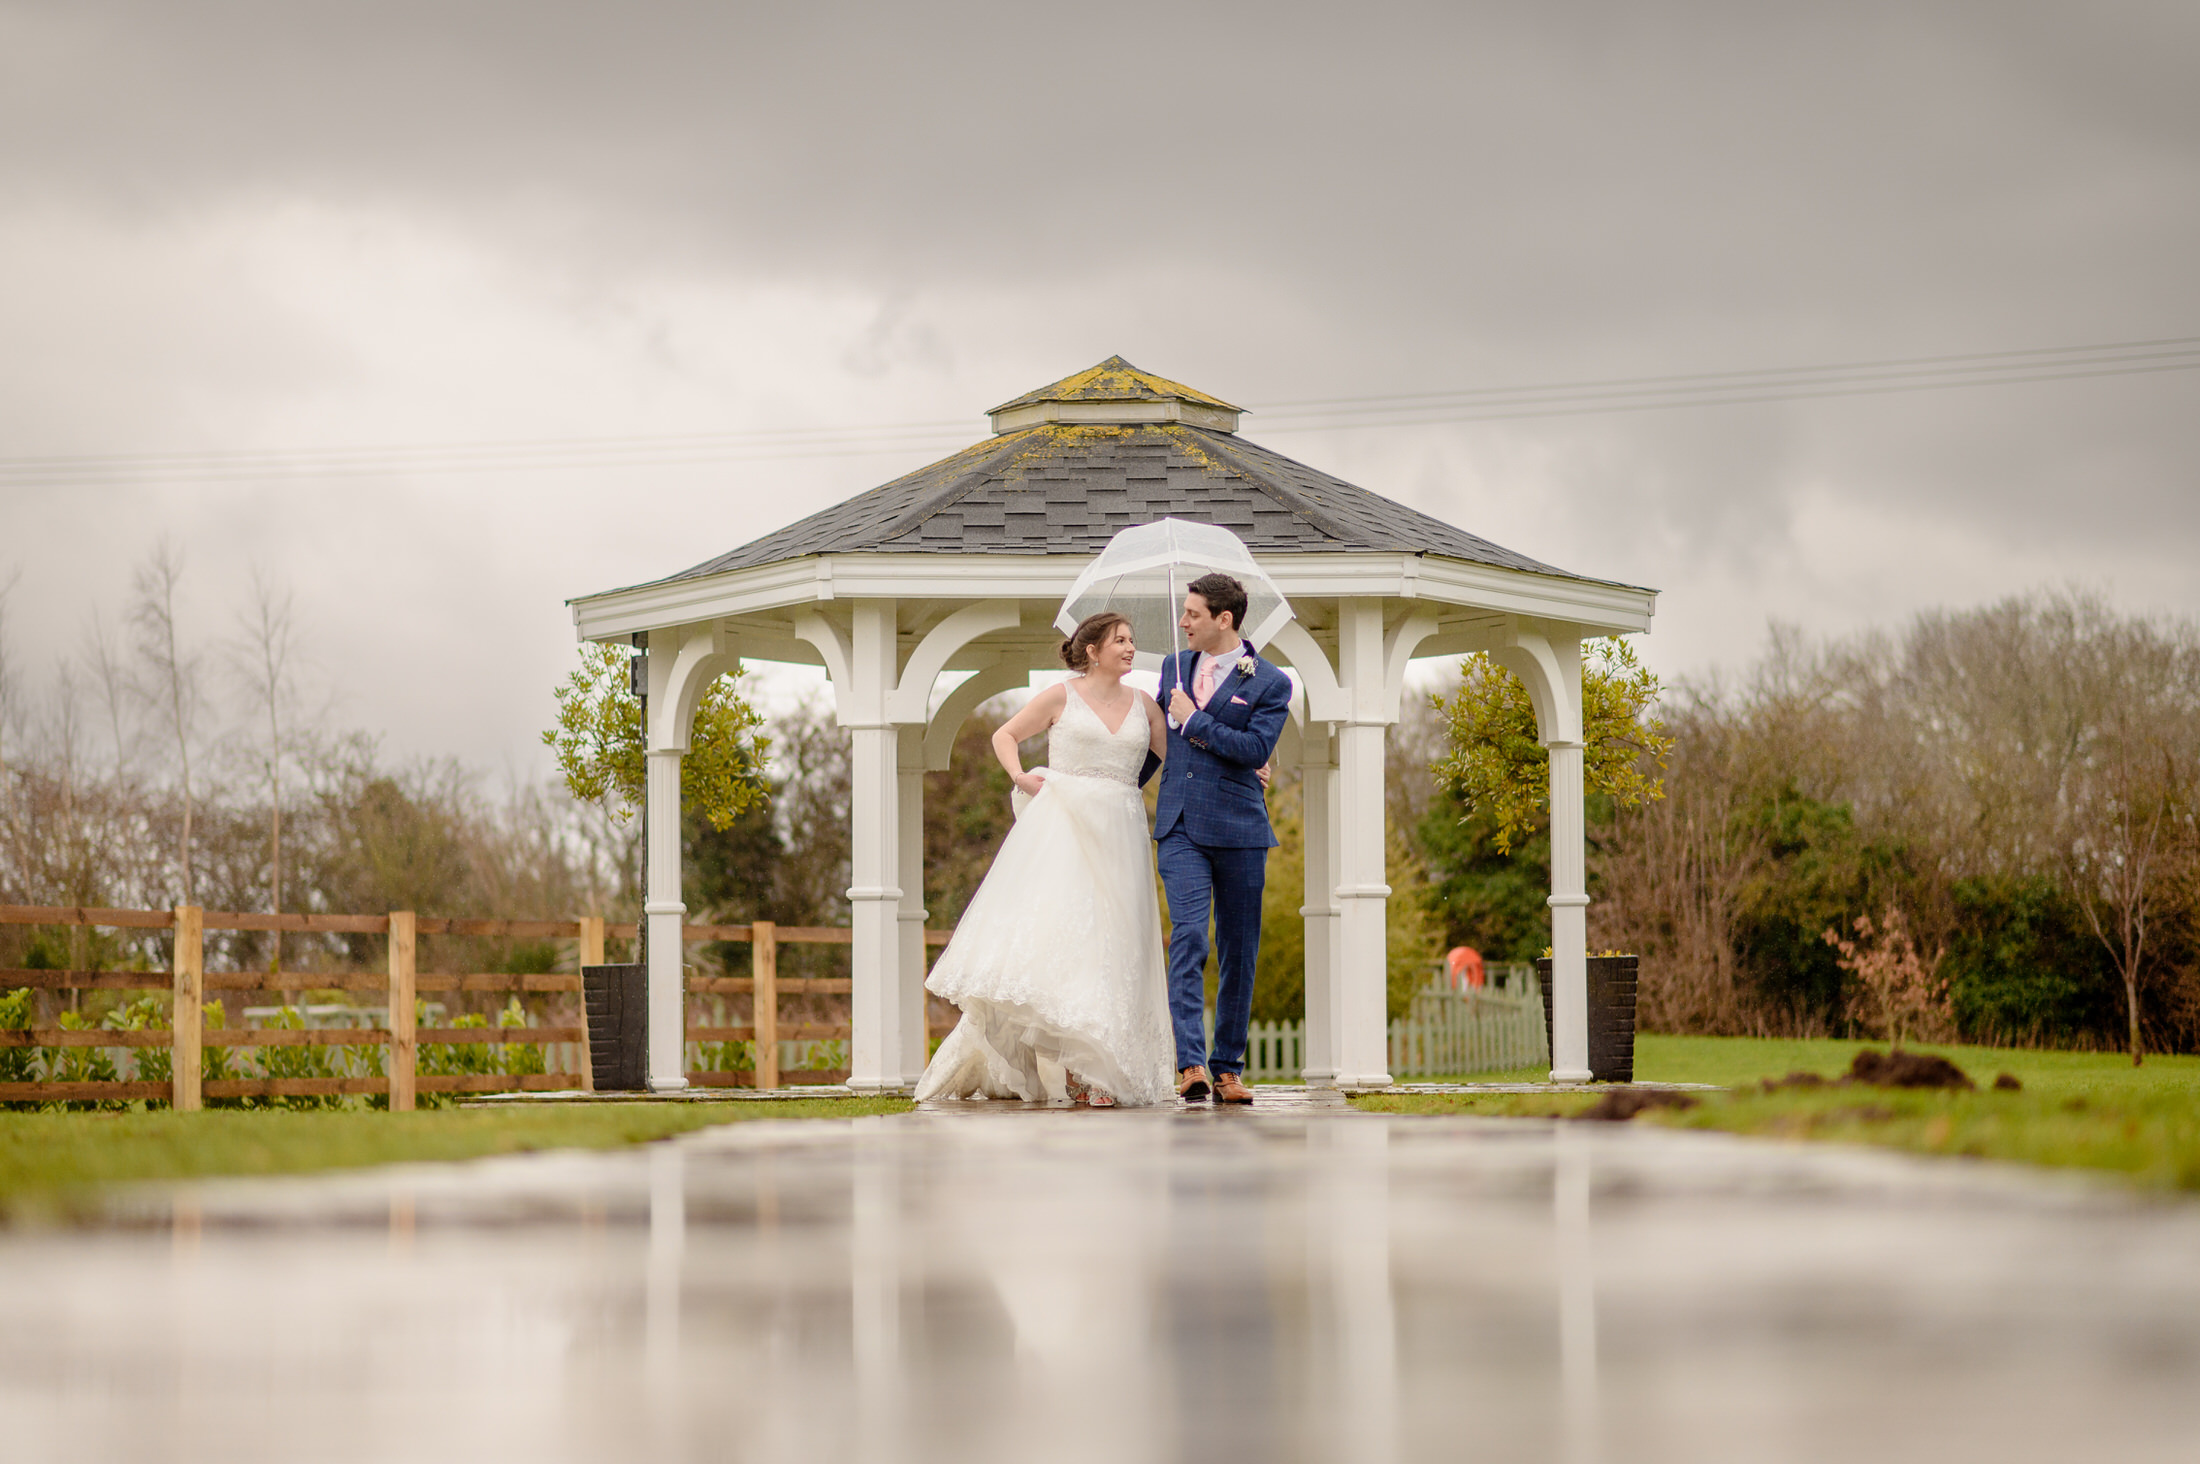 A couple in wedding attire, standing under an umbrella at the Brackenborough Hotel wedding.